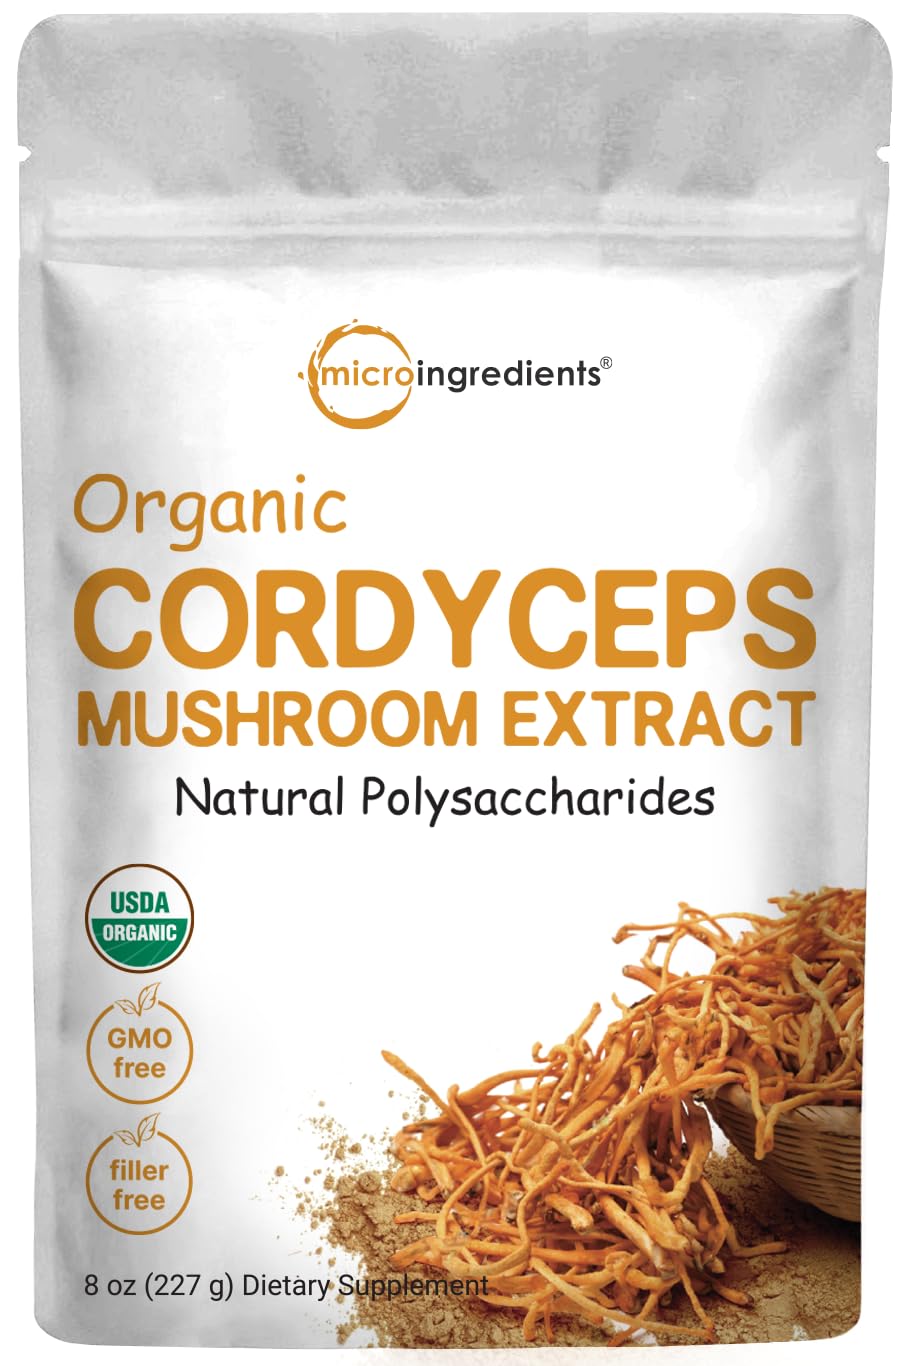 Micro Ingredients Organic Cordyceps Mushroom Extract Powder, 8 Ounces | 100:1 Fruit Body & Mycelium Extract | Active Polysaccharides & Cordycepic Acid | Supports Energy & Immune Health